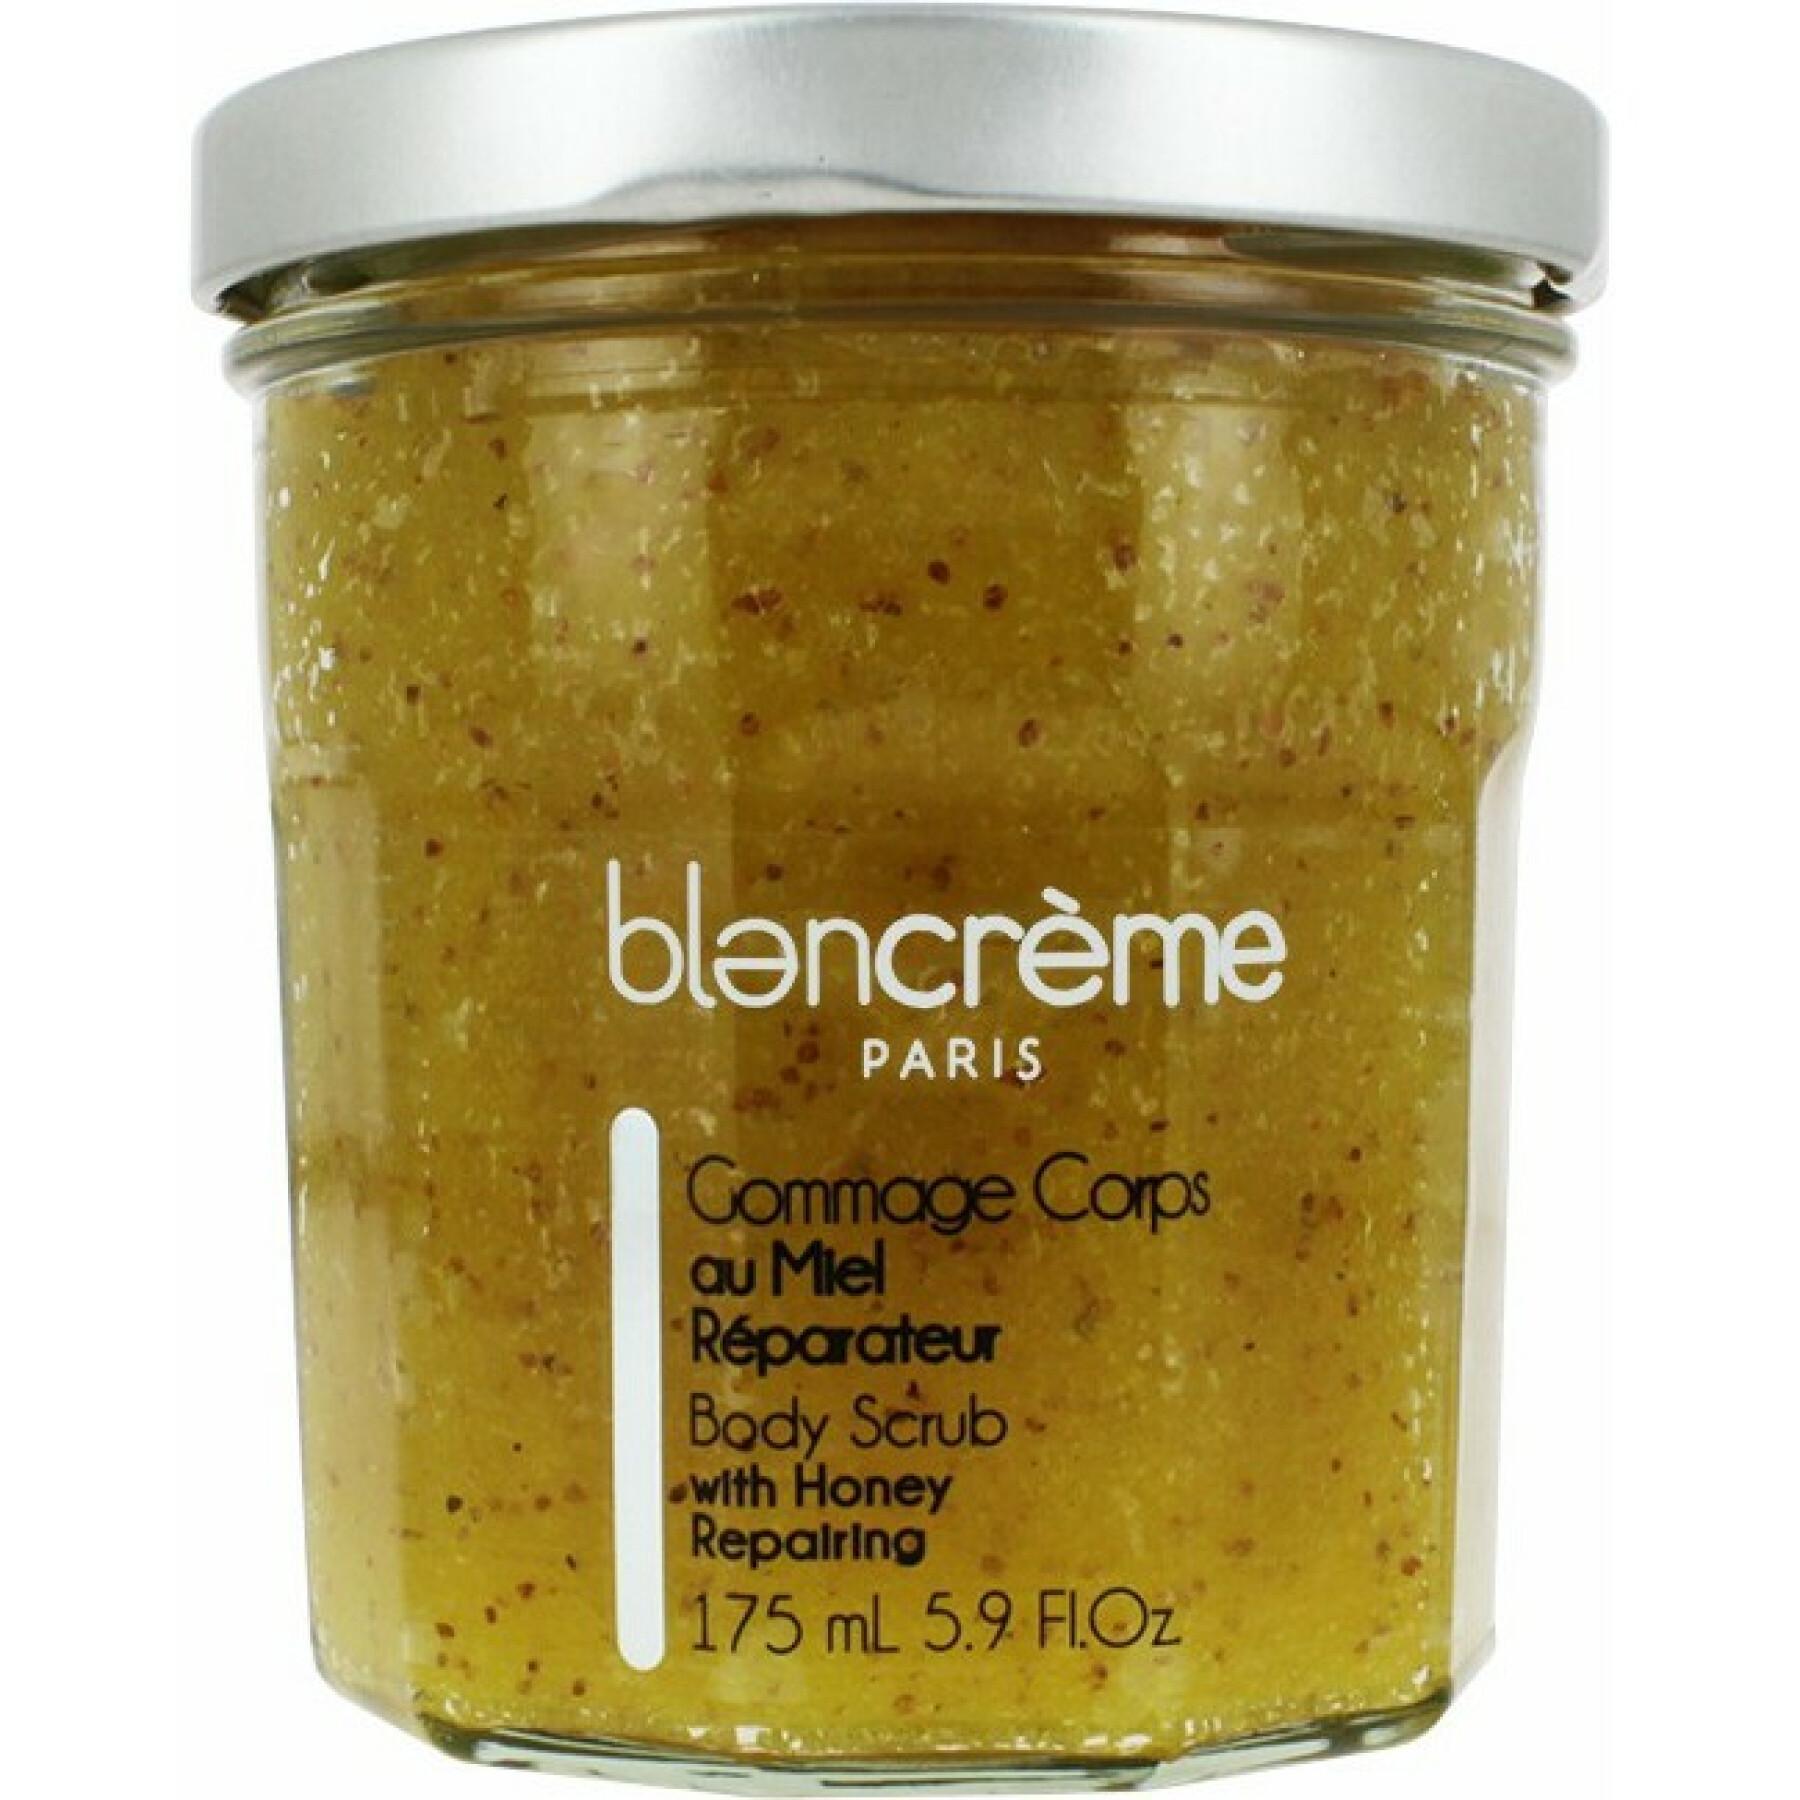 Body scrub - honey - Blancreme 175 ml